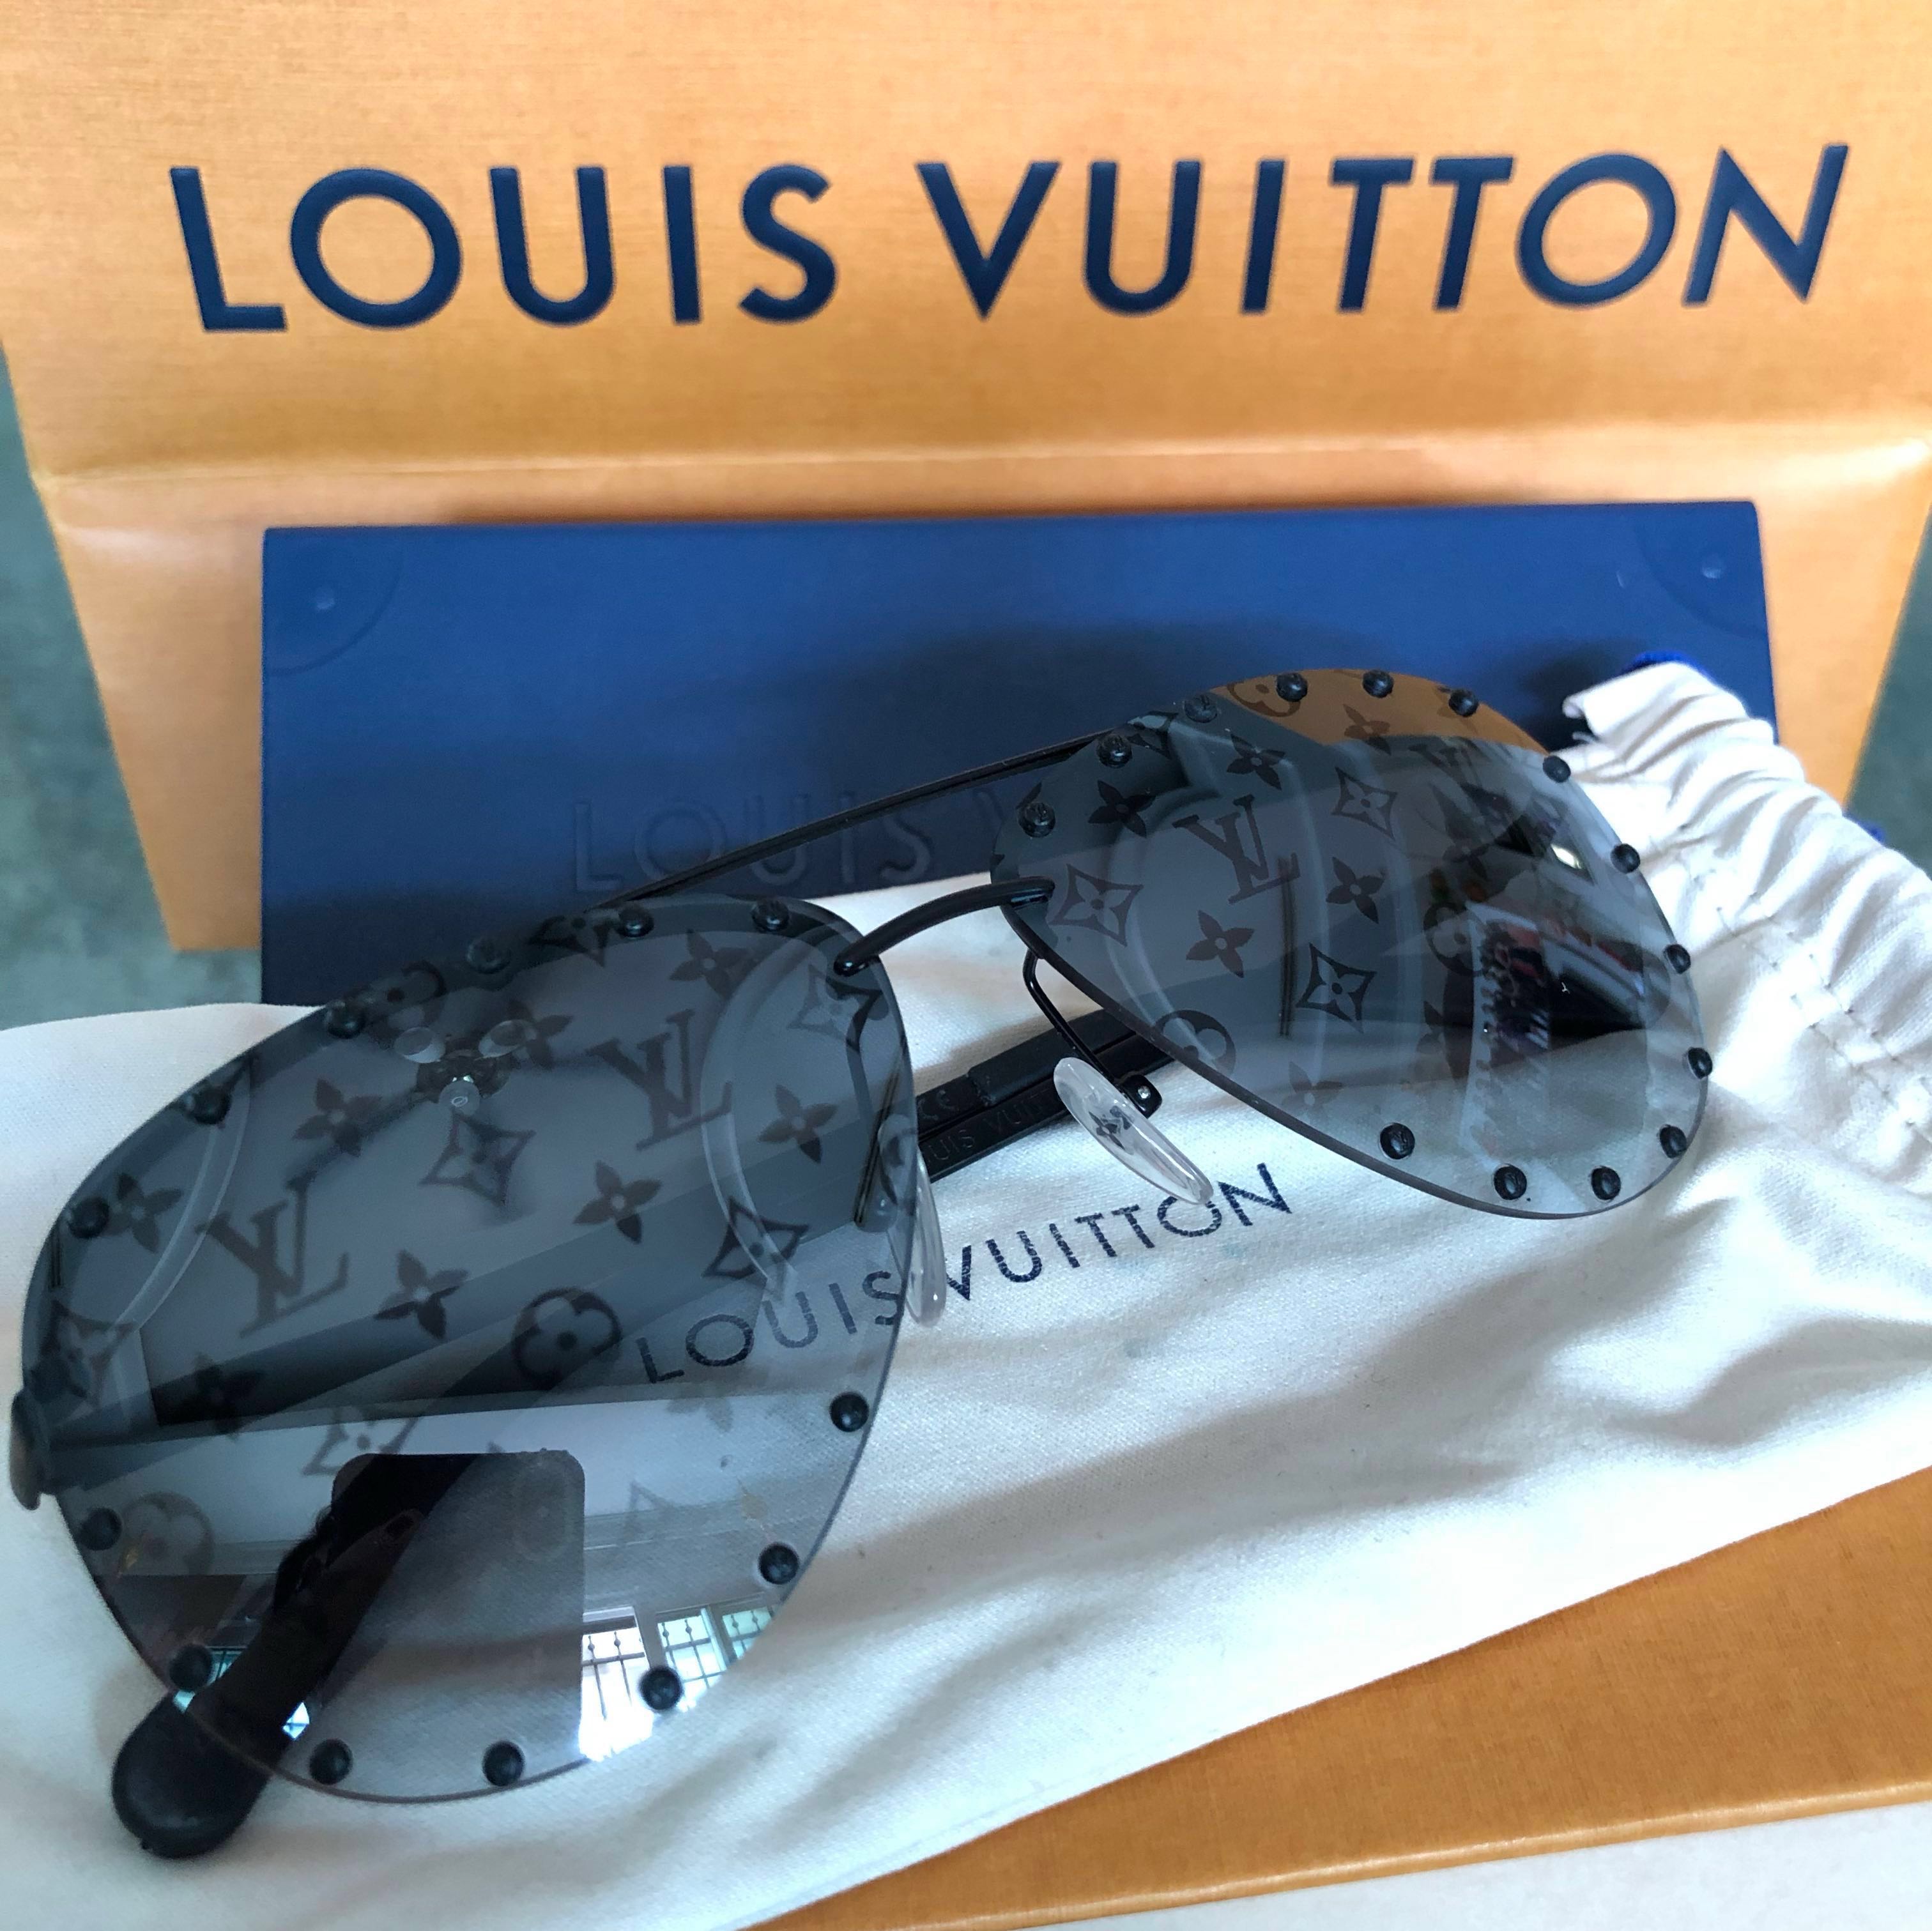 Louis Vuitton The Party Sunglasses  Party sunglasses, Sunglasses, Louis  vuitton